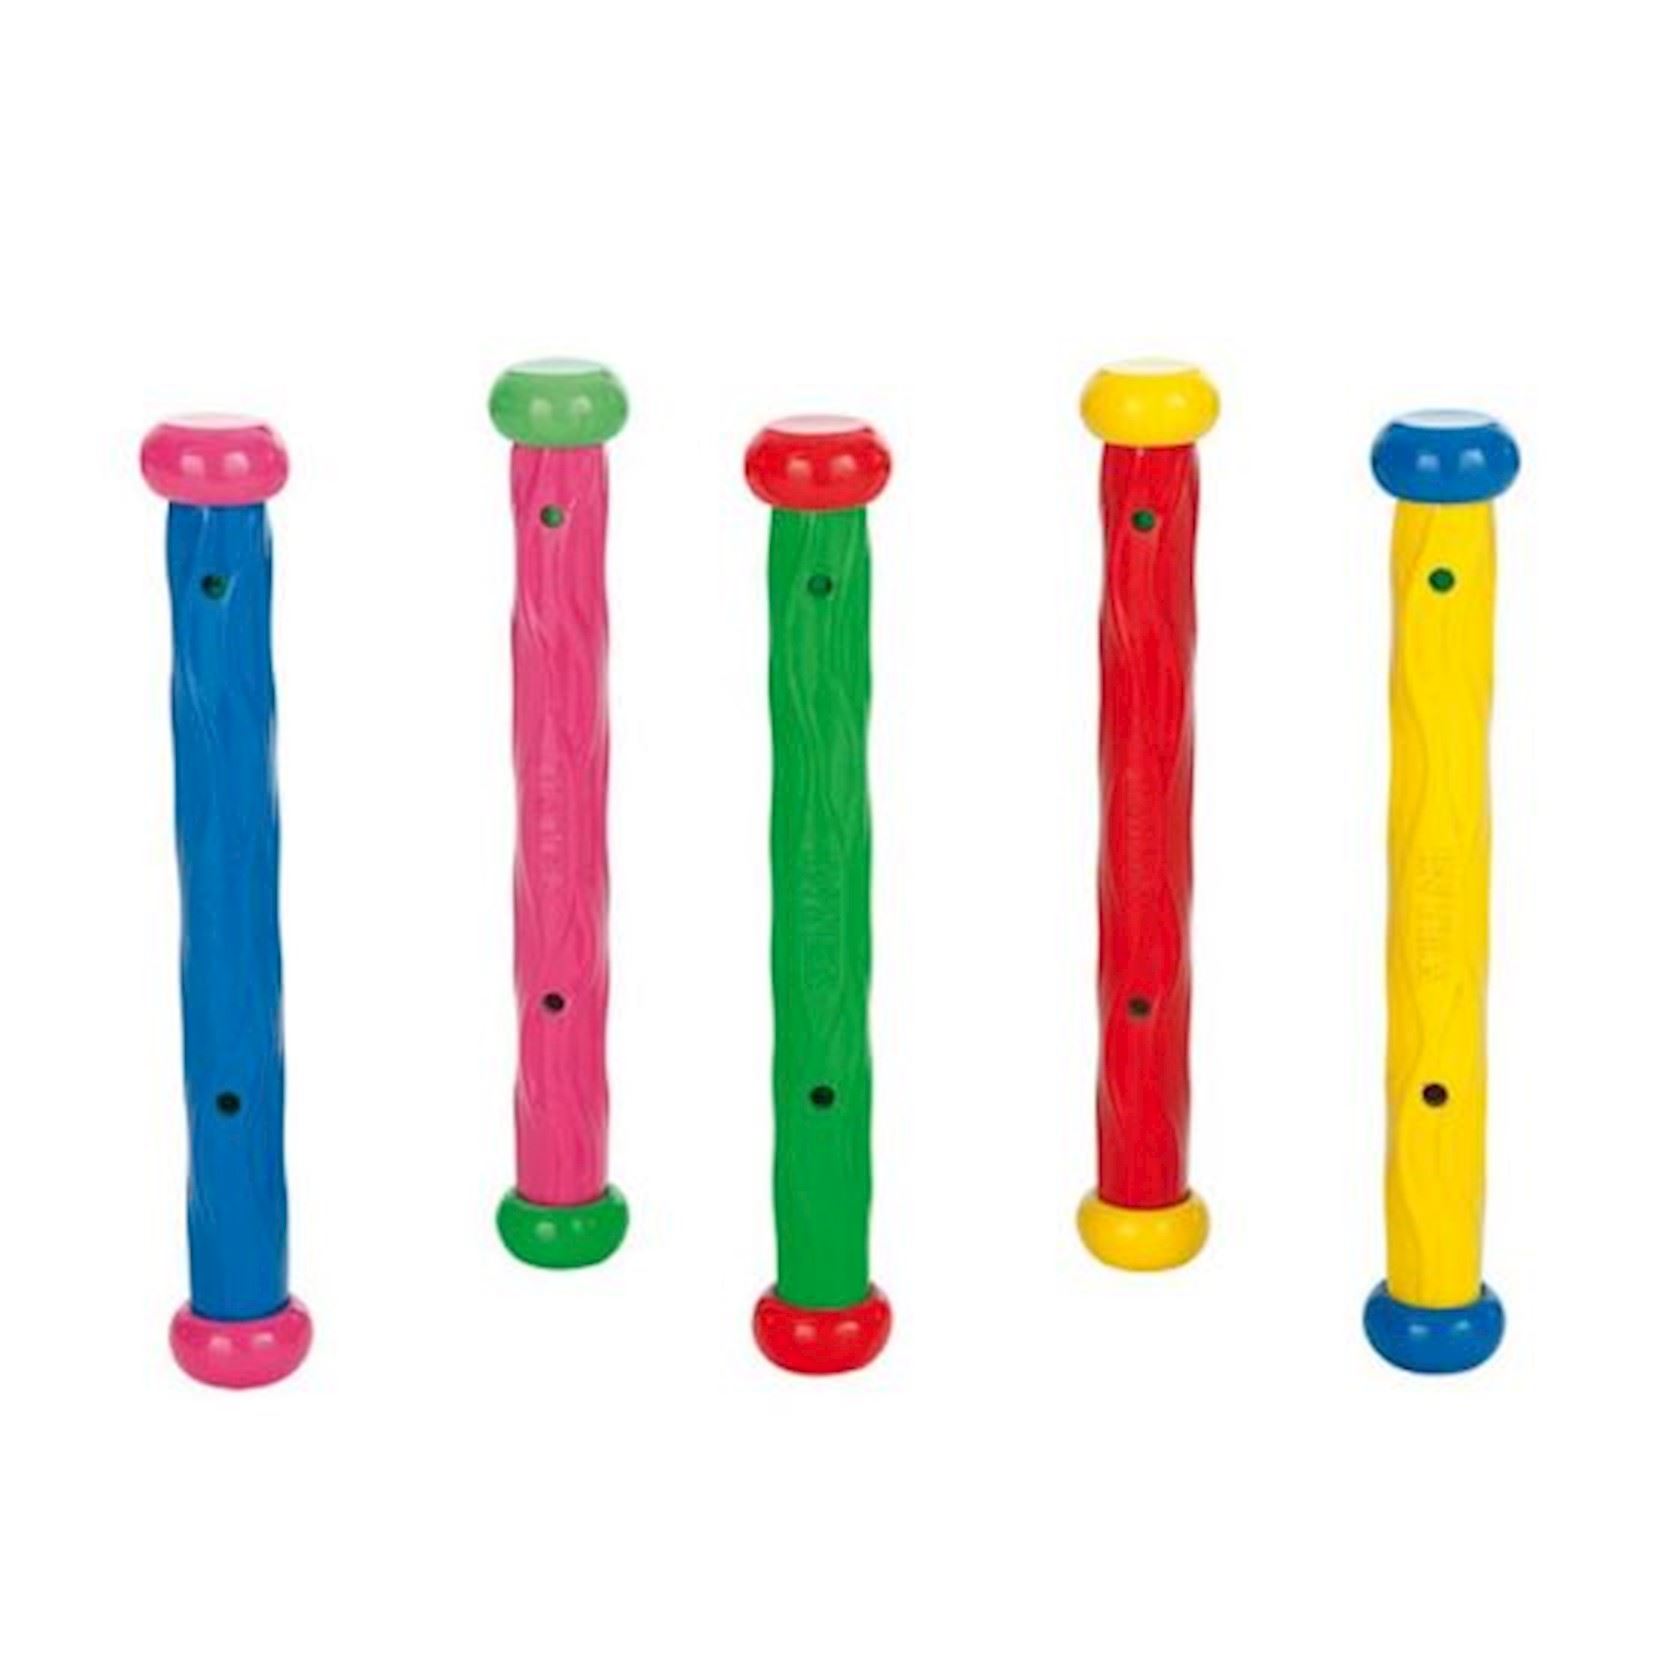 Intex colorful dive sticks - set of 5